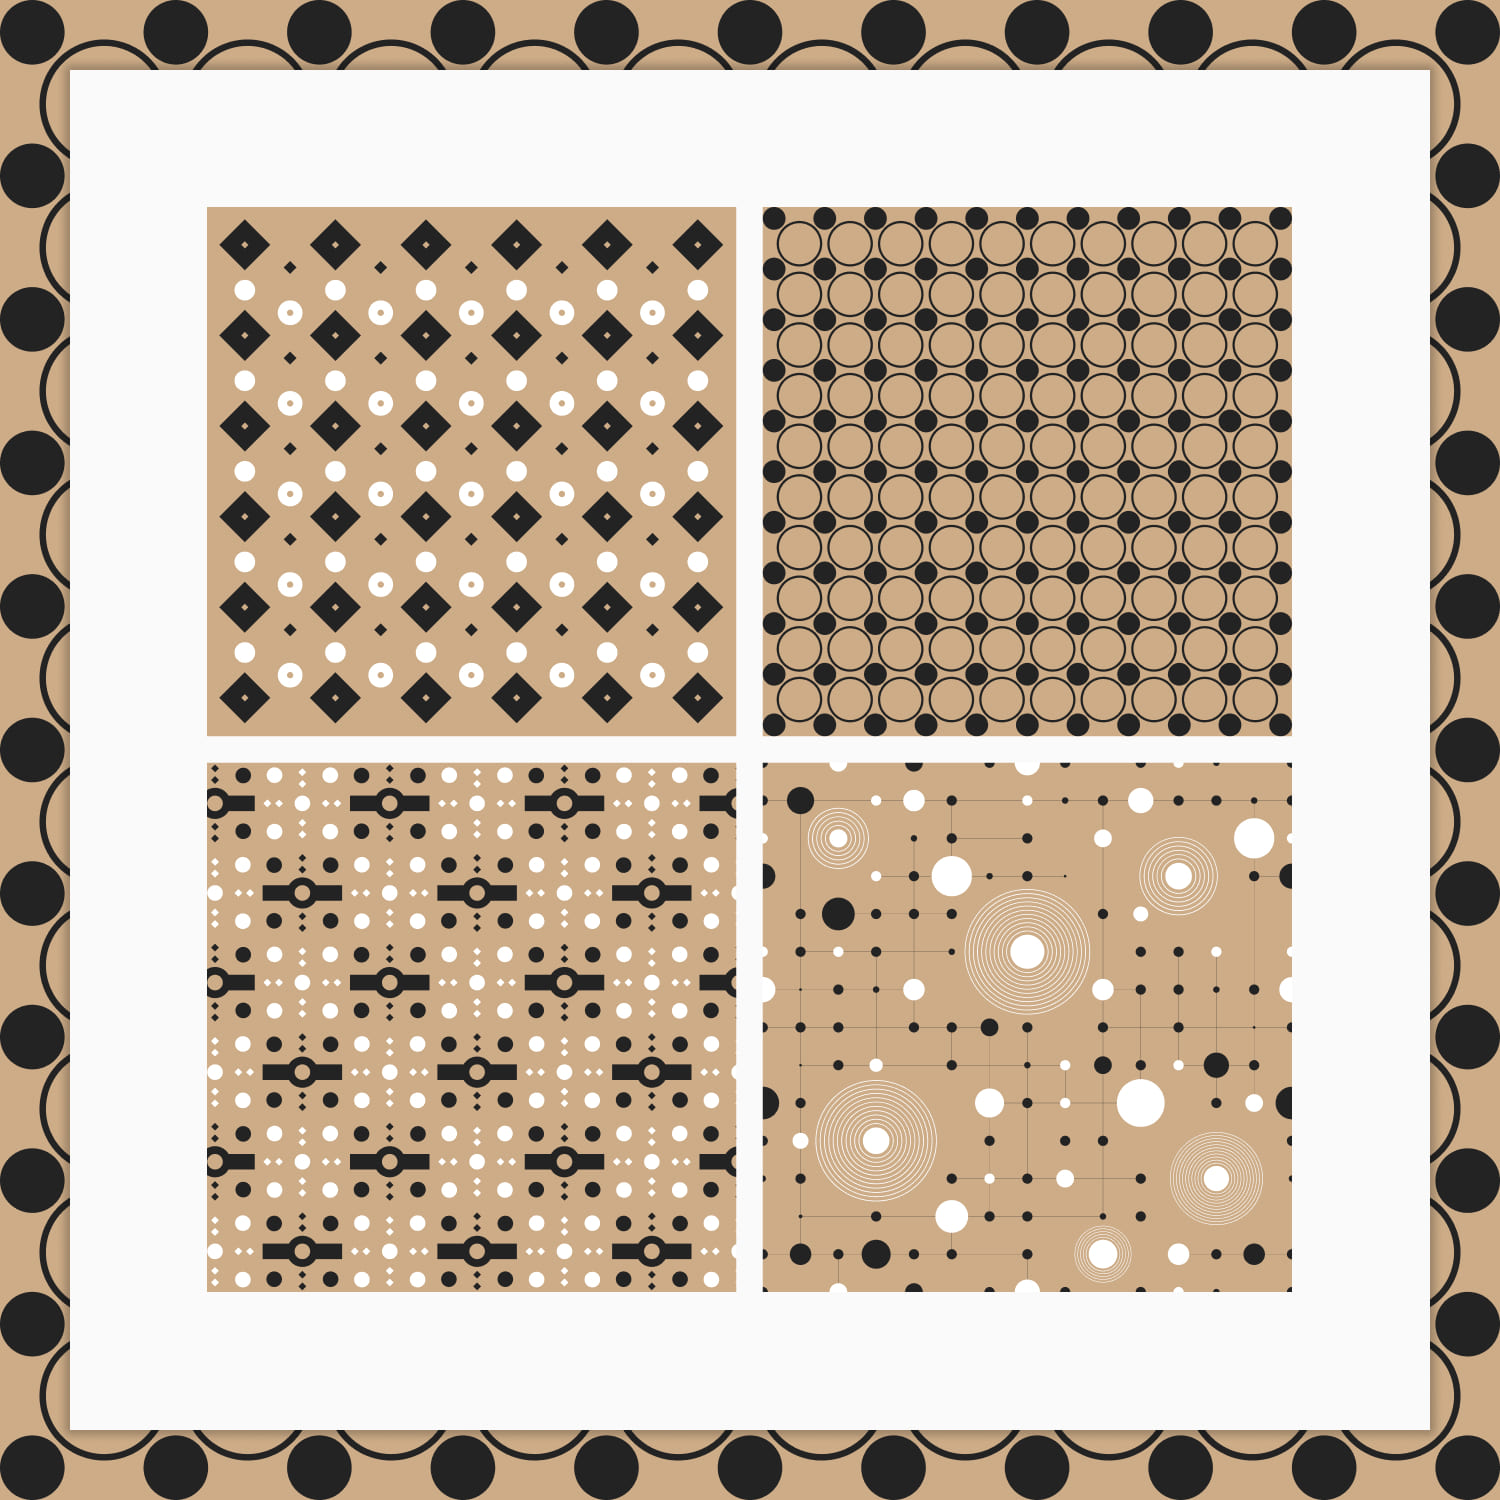 black and white polka dot patterns cover.